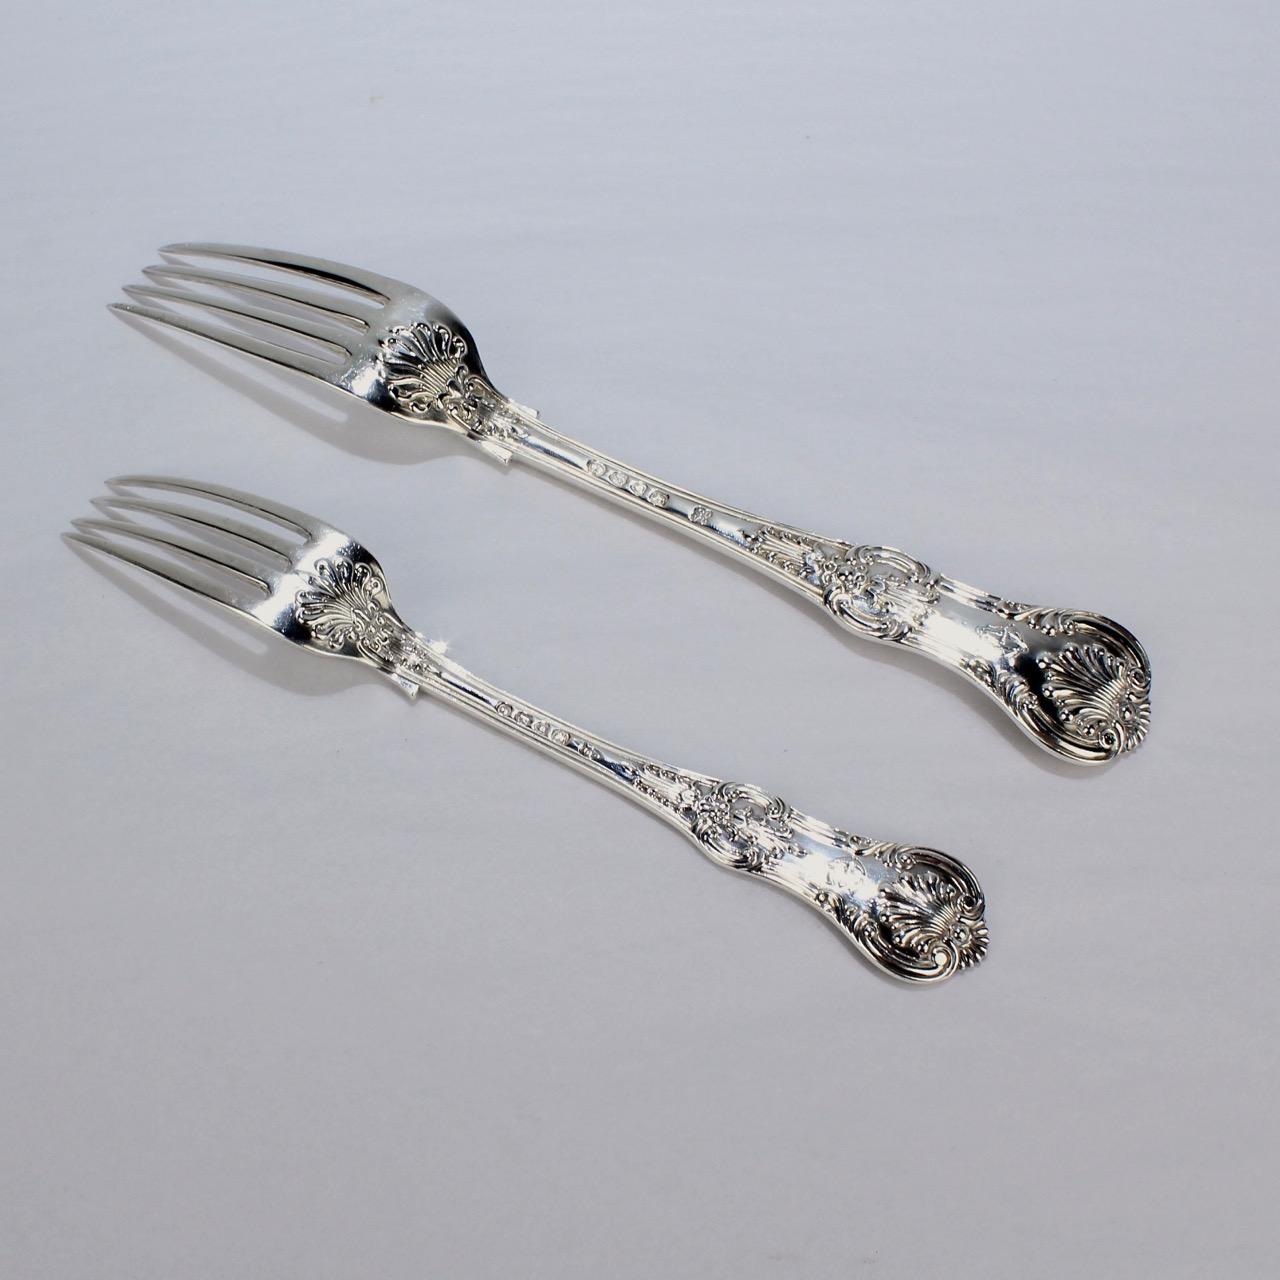 queens pattern silver cutlery